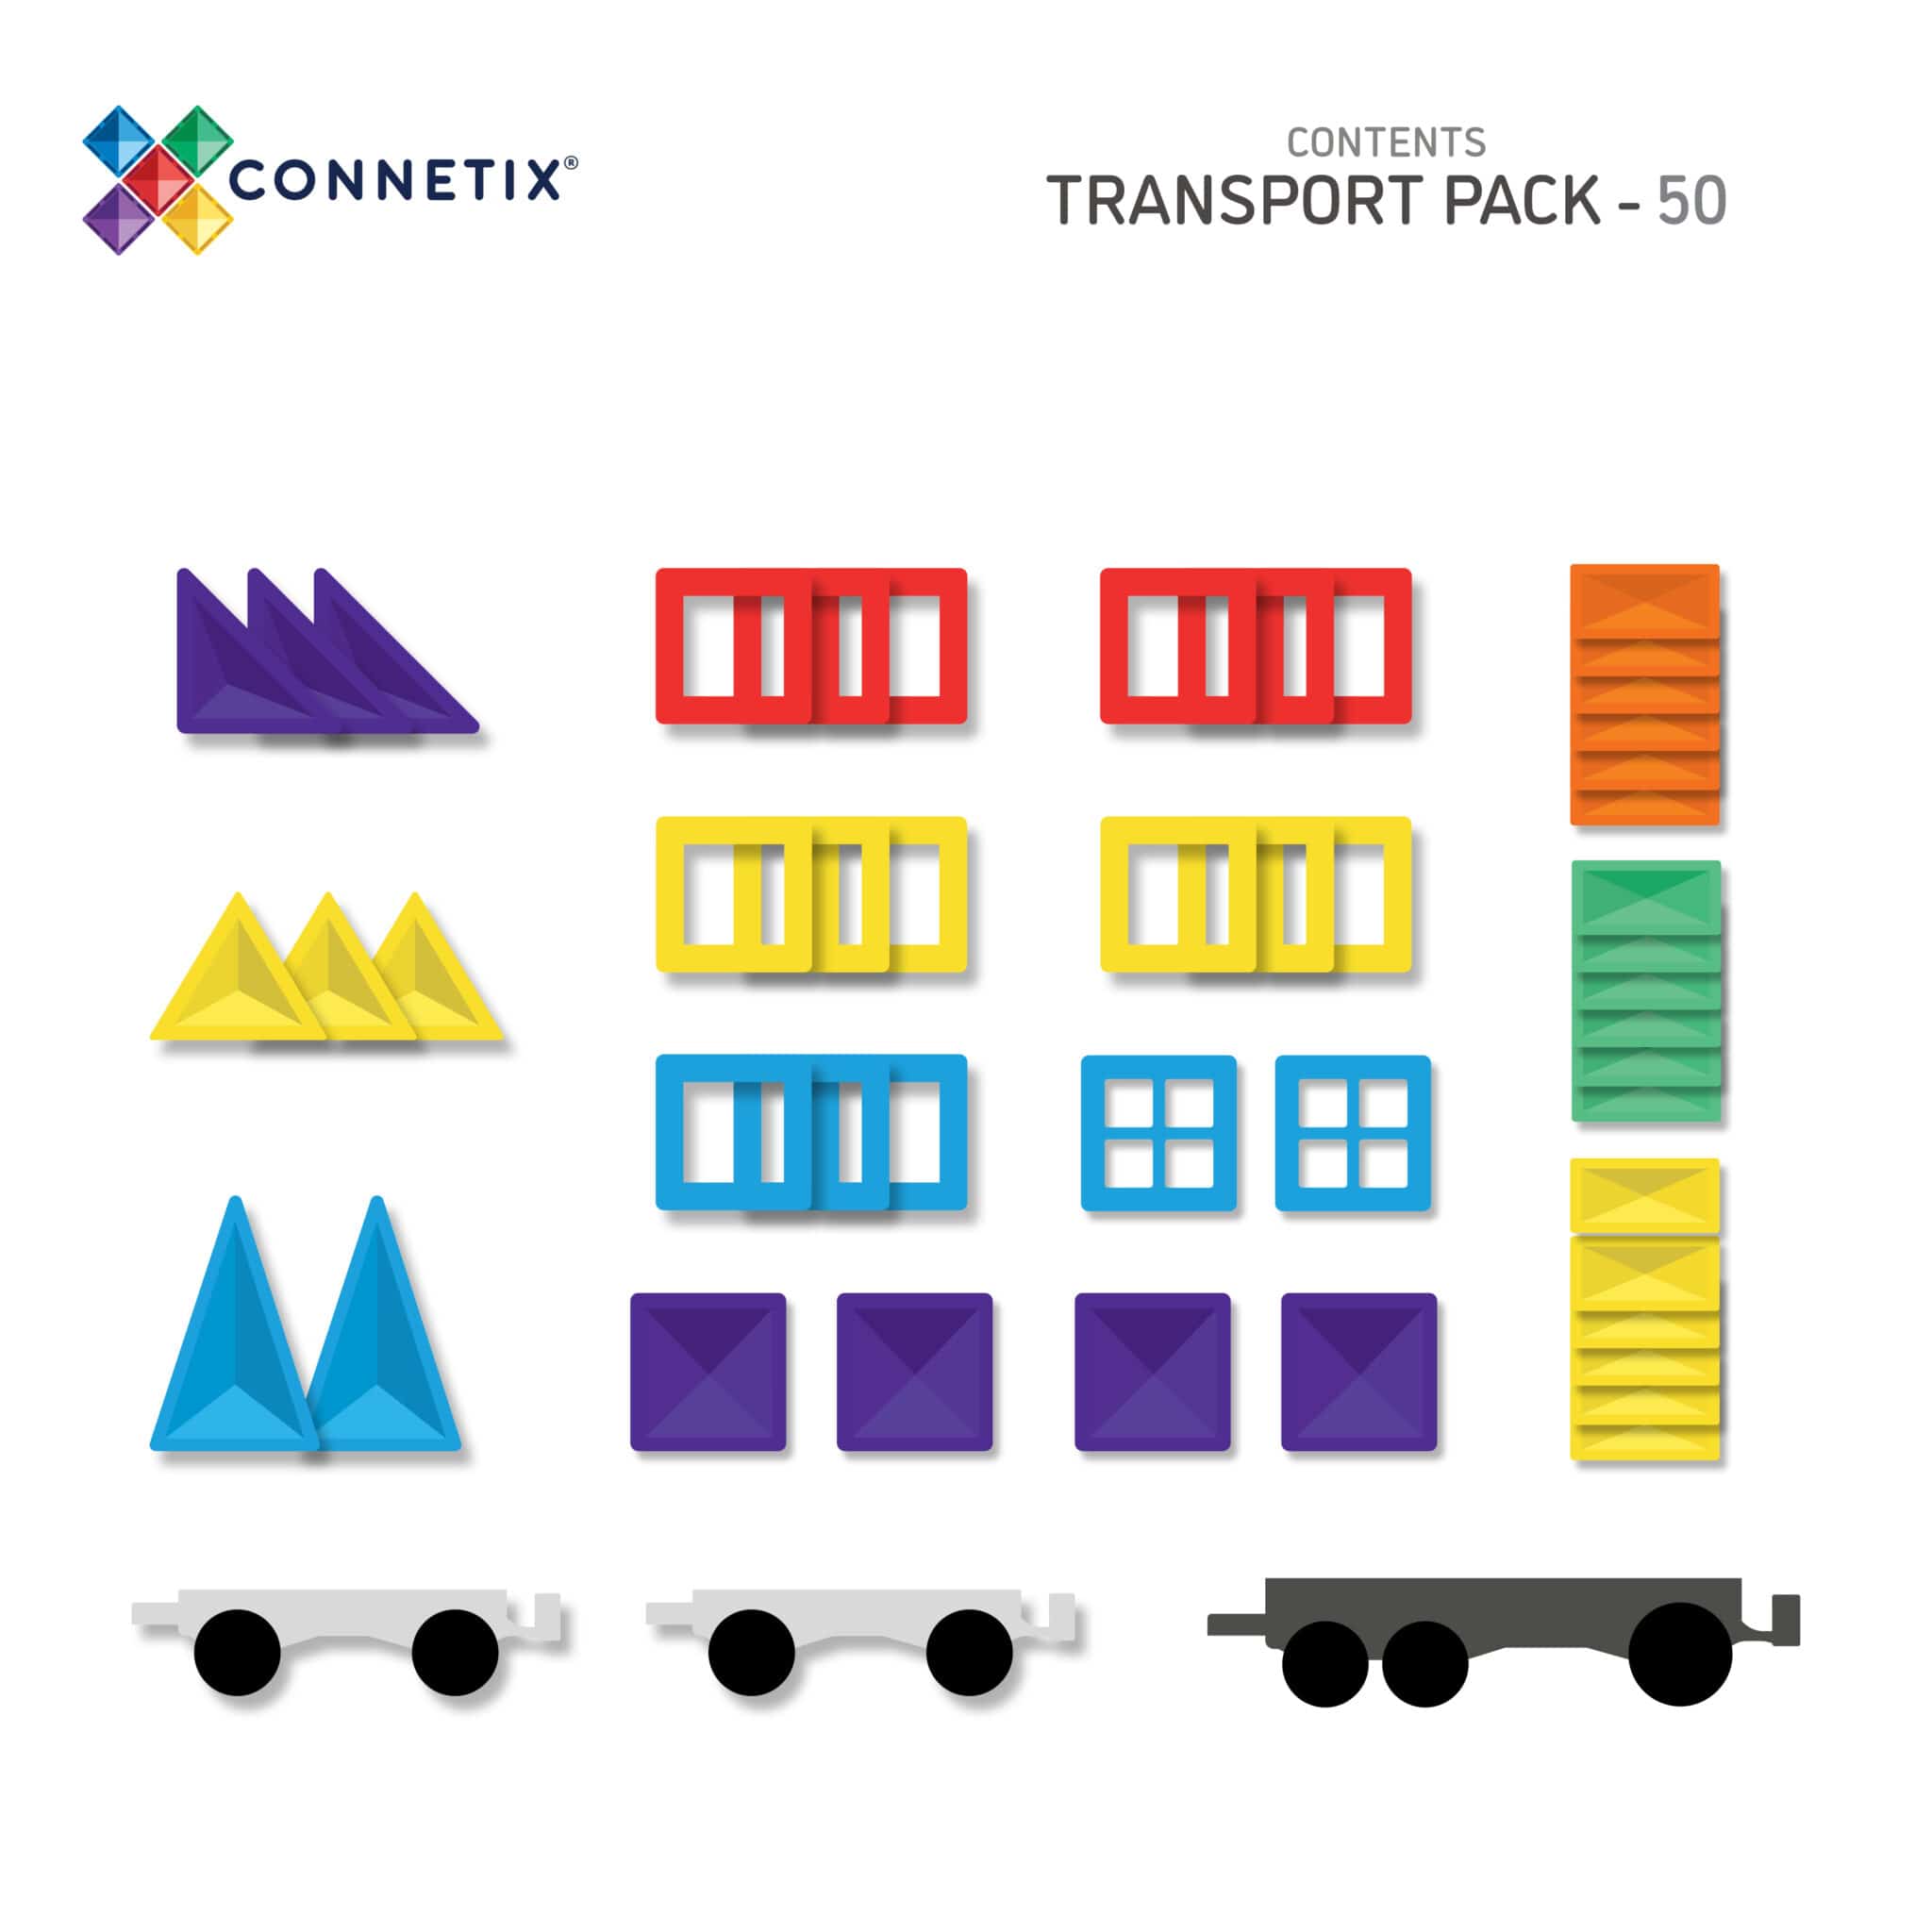 Connetix Rainbow Transporter Pack - 50 Teile